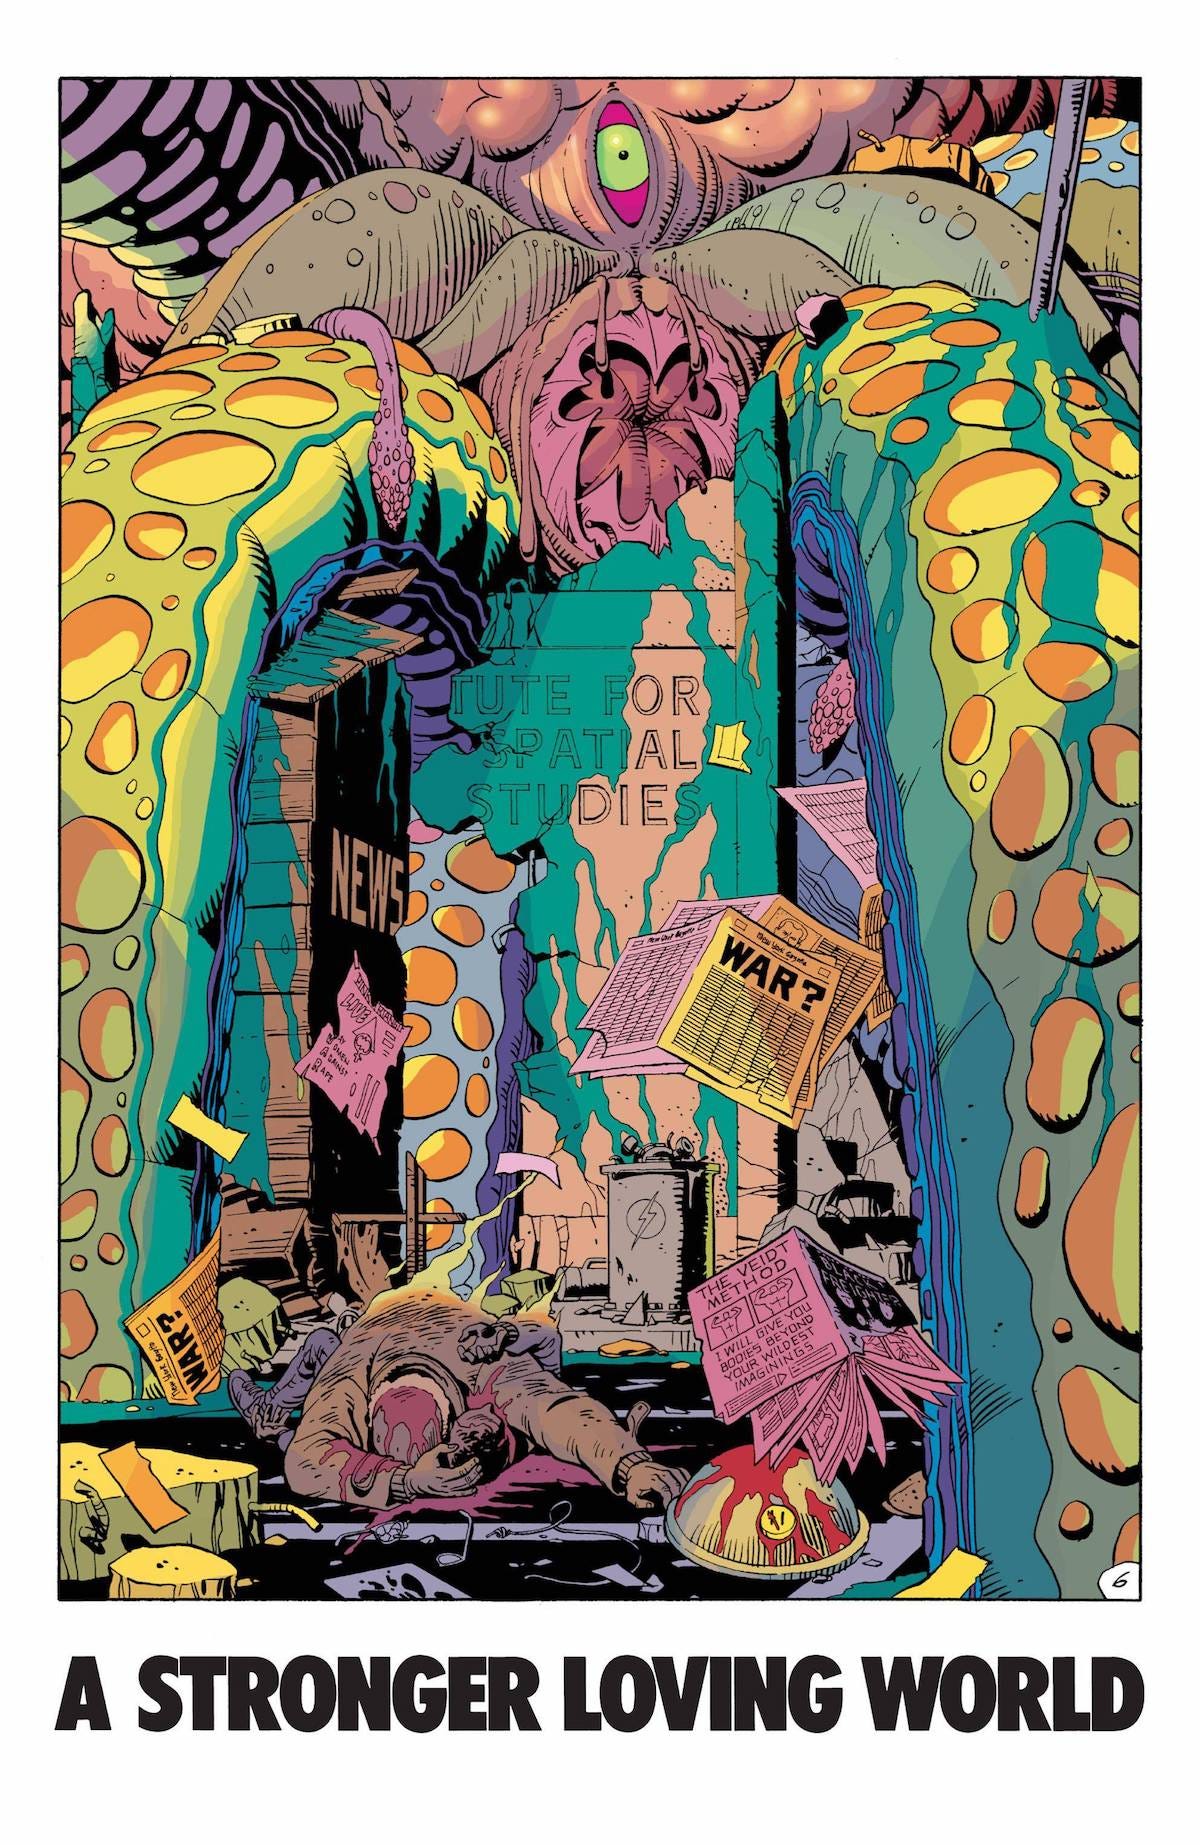 Giant Squid Panel from Watchmen comic